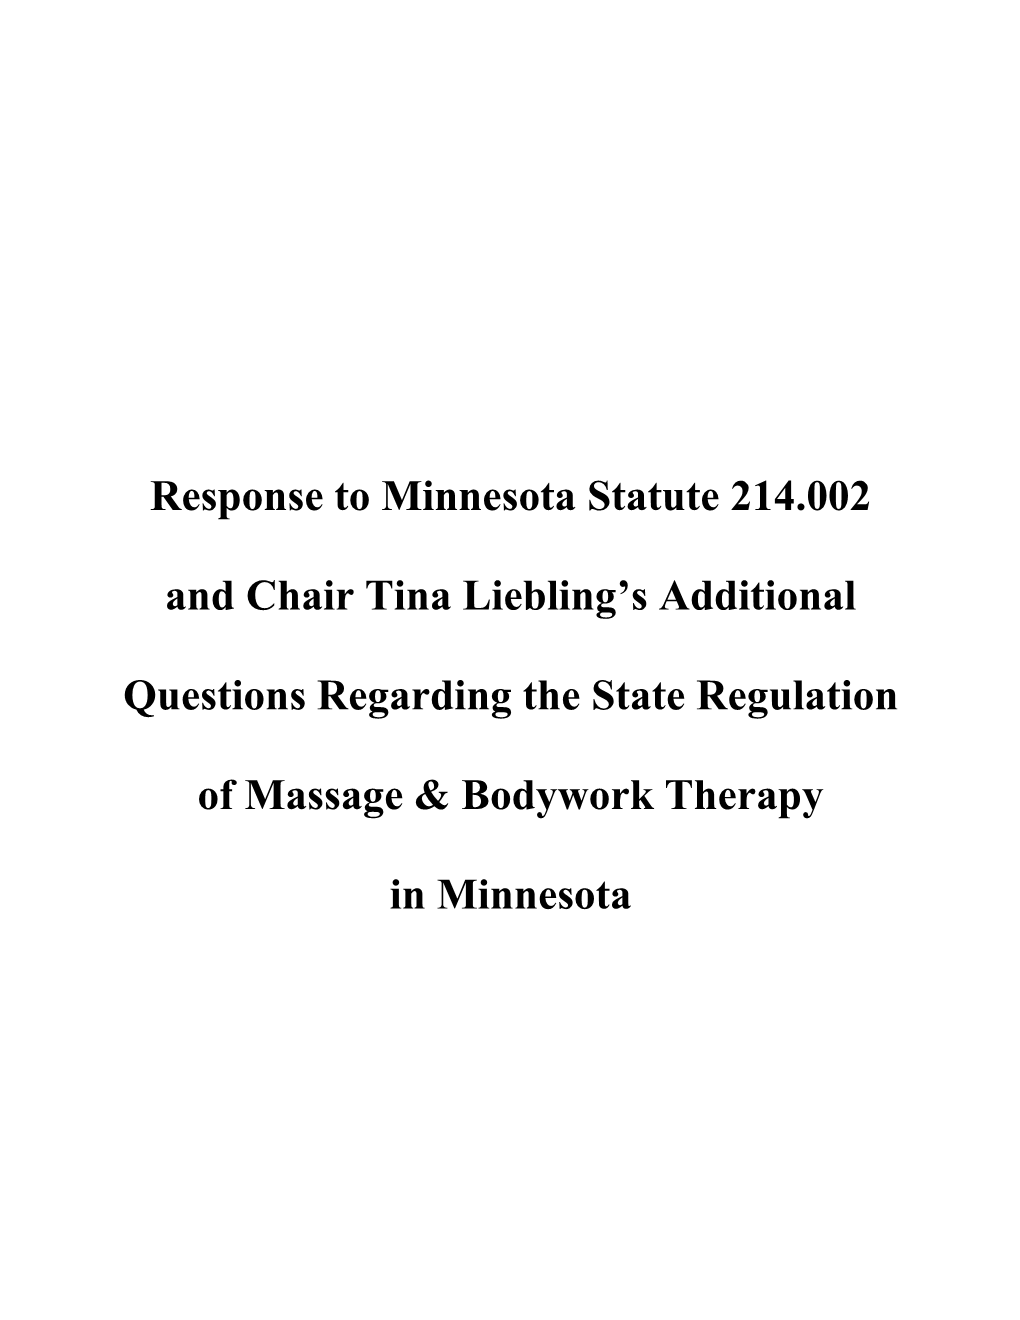 Massage Therapist Questionnaire Response